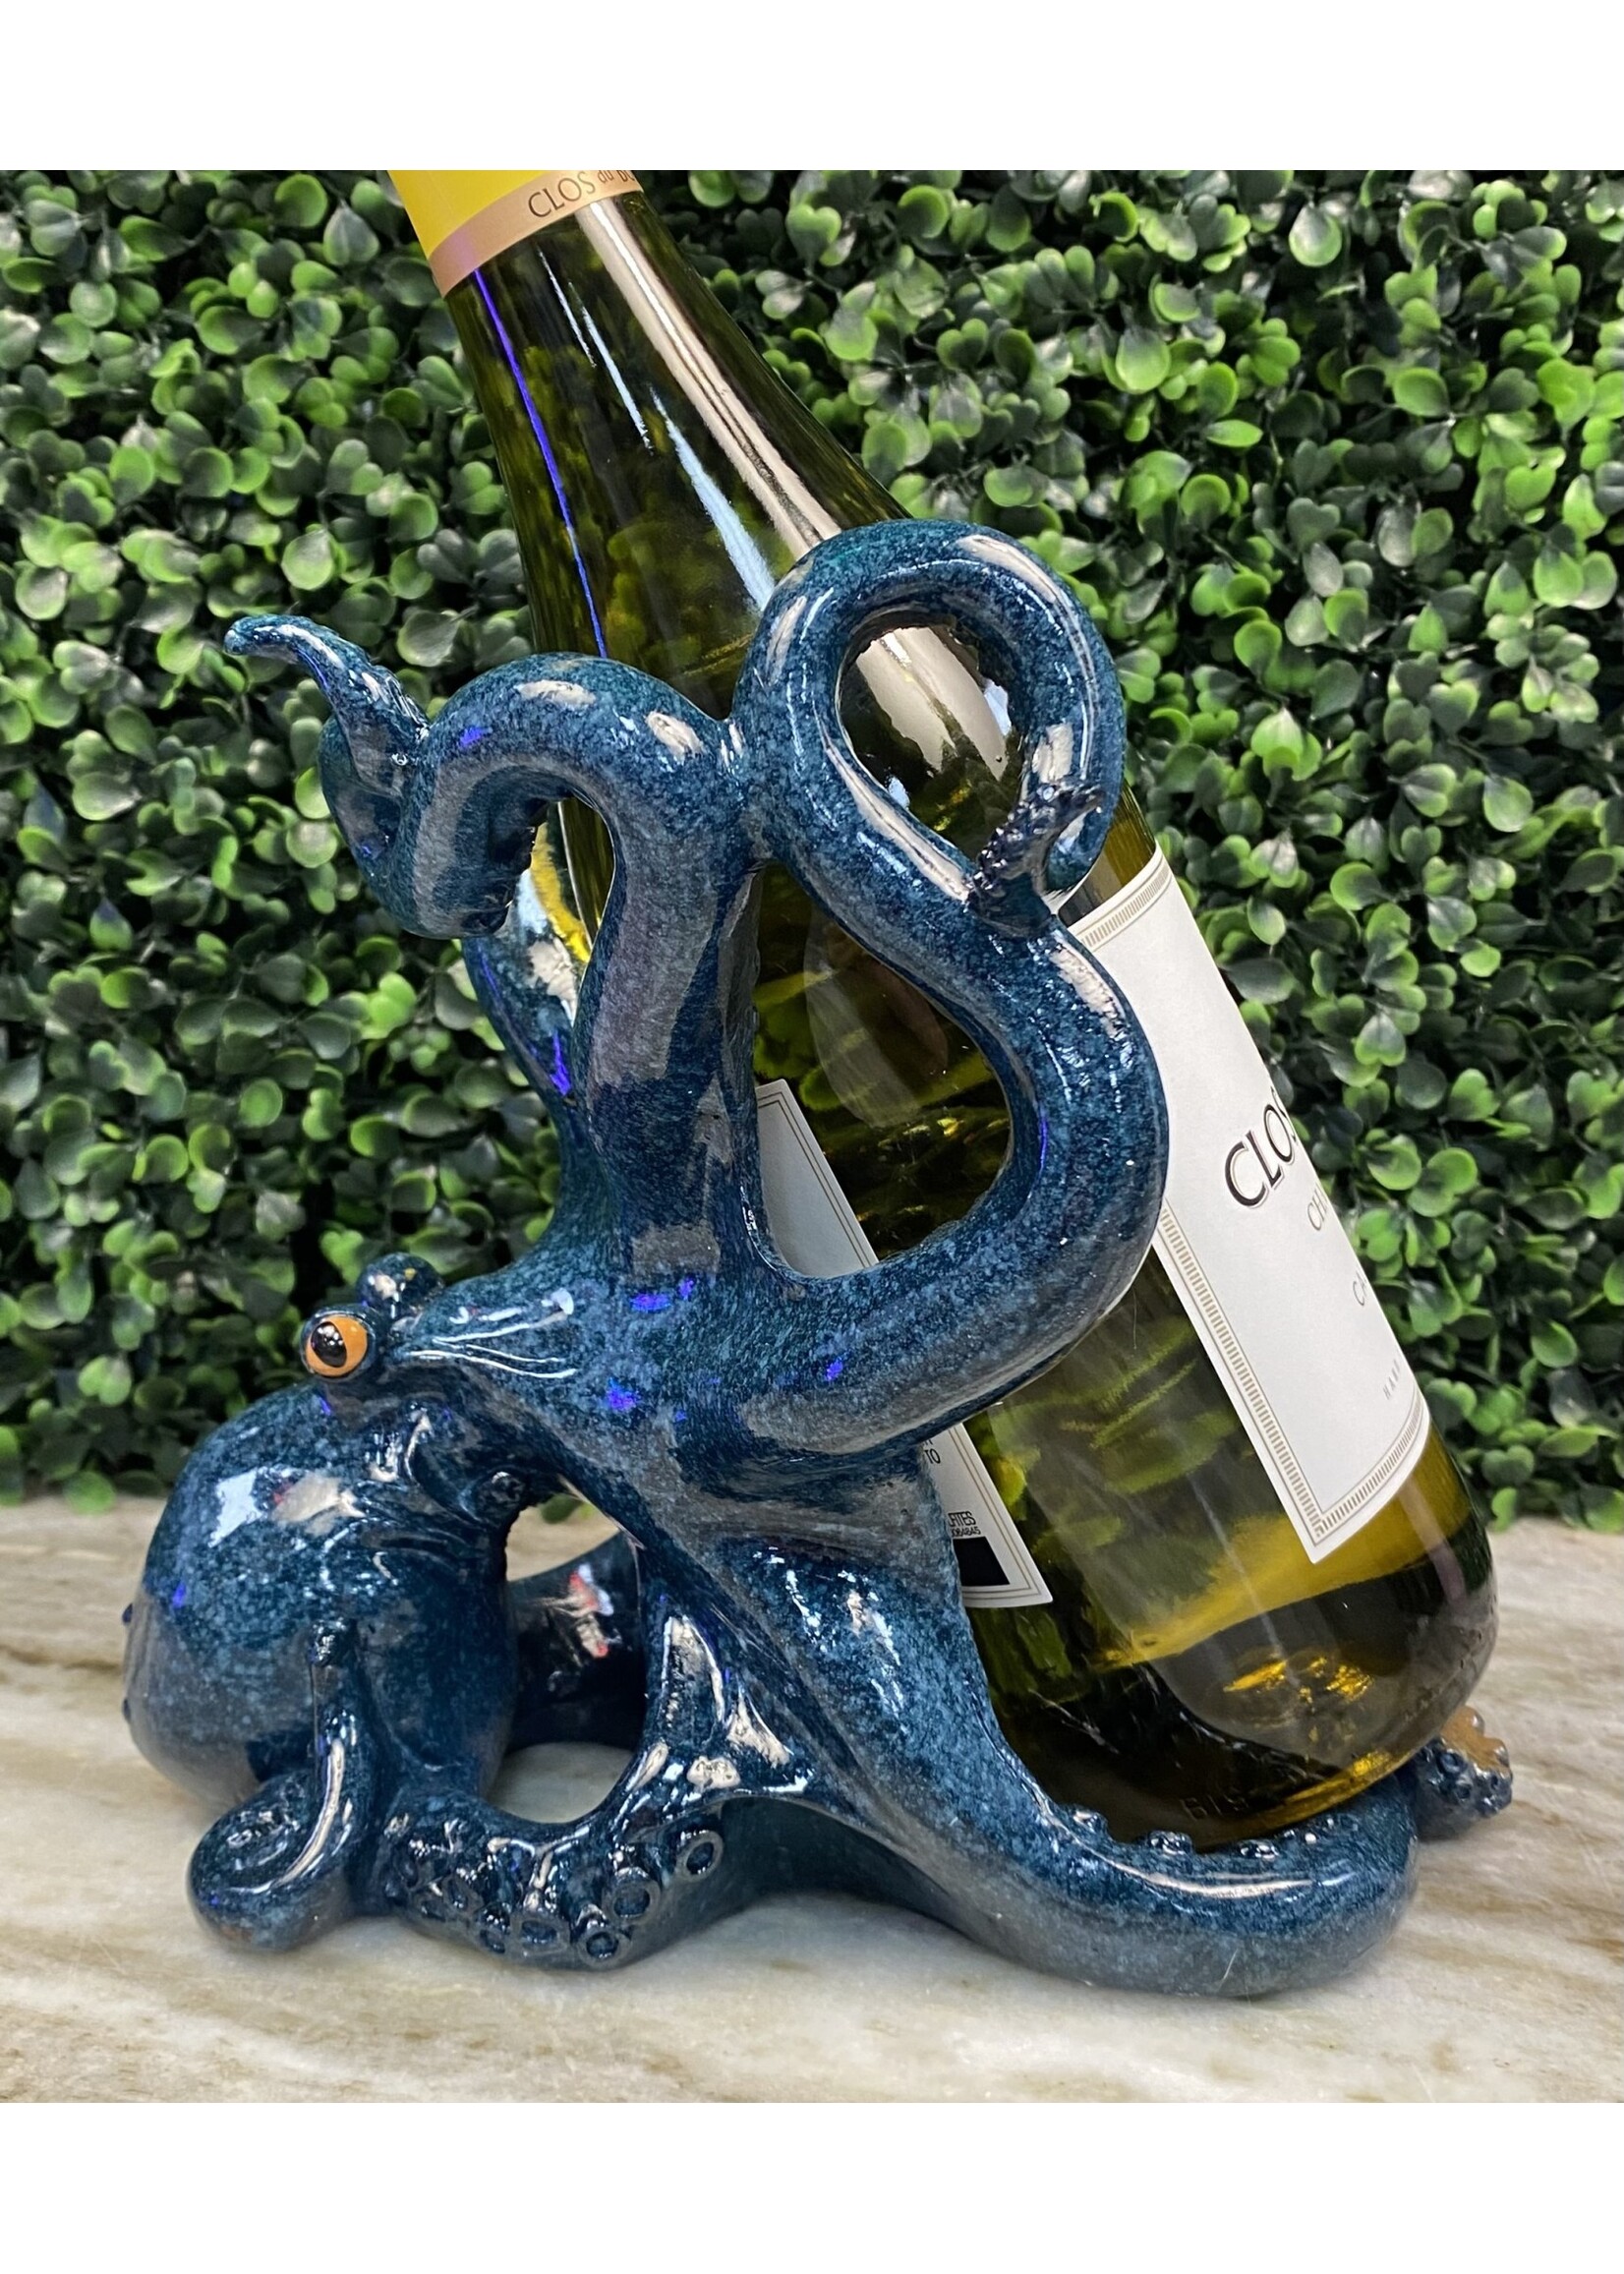 Sea Creations Octopus Wine Bottle Holder